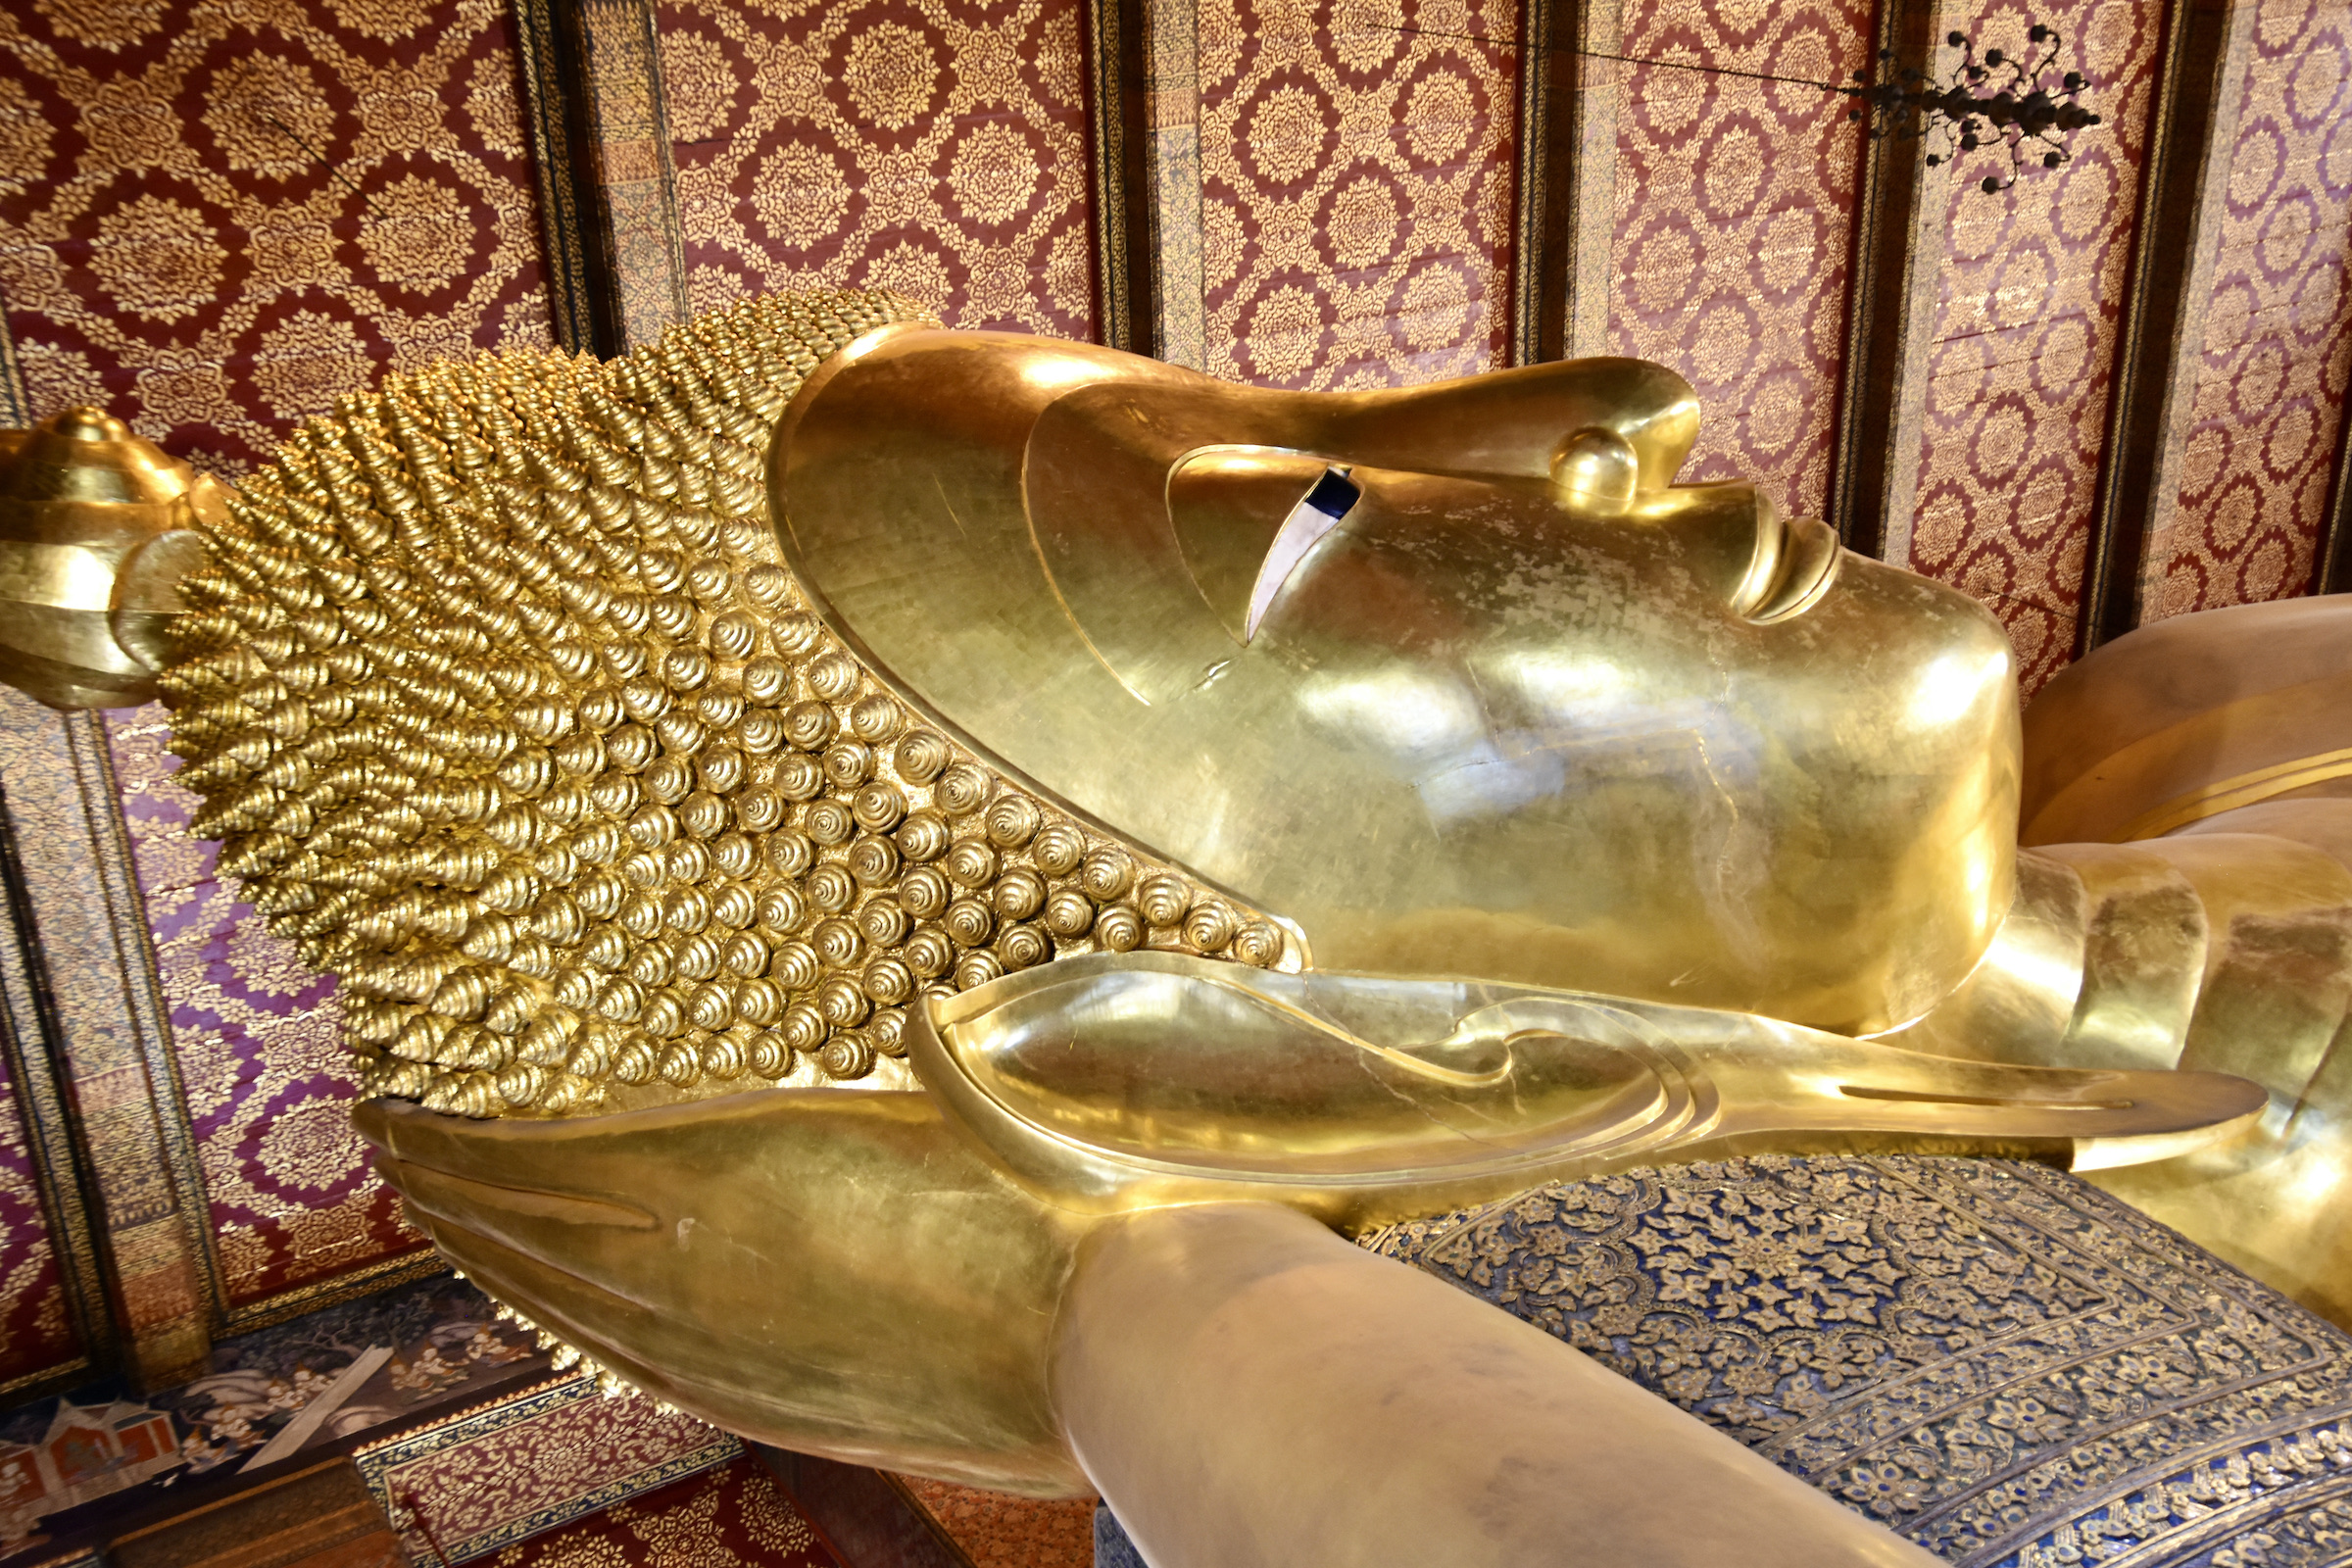 Head of the Reclining Buddha, Wat Pho